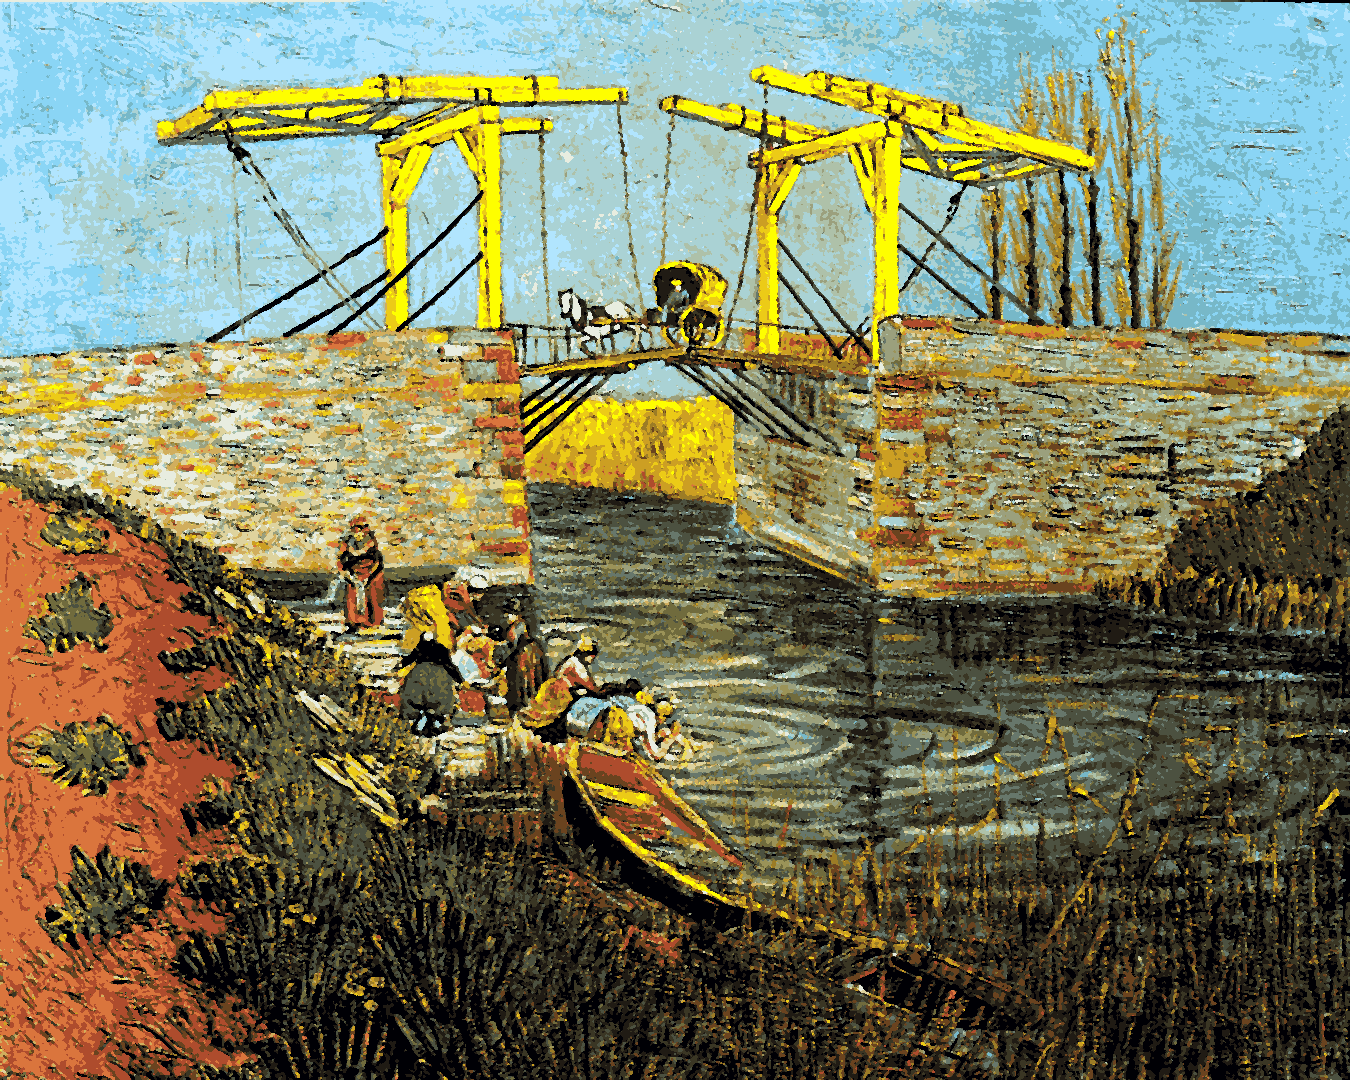 Vincent Van Gogh PD - (146) - The Langlois Bridge at Arles - Van-Go Paint-By-Number Kit